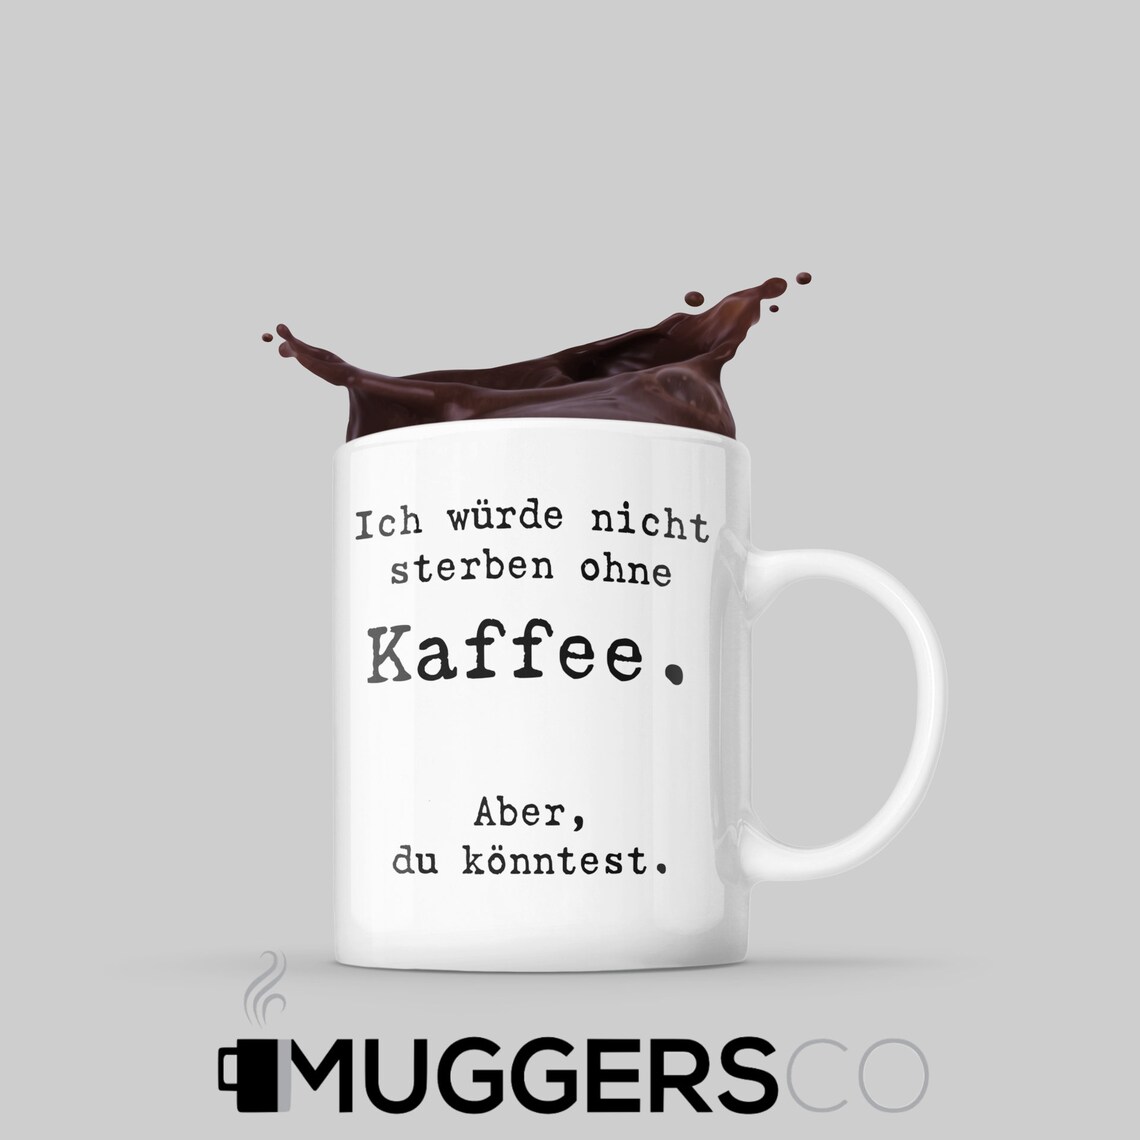 BEST SELLER German gifts Germany German language mug I Etsy